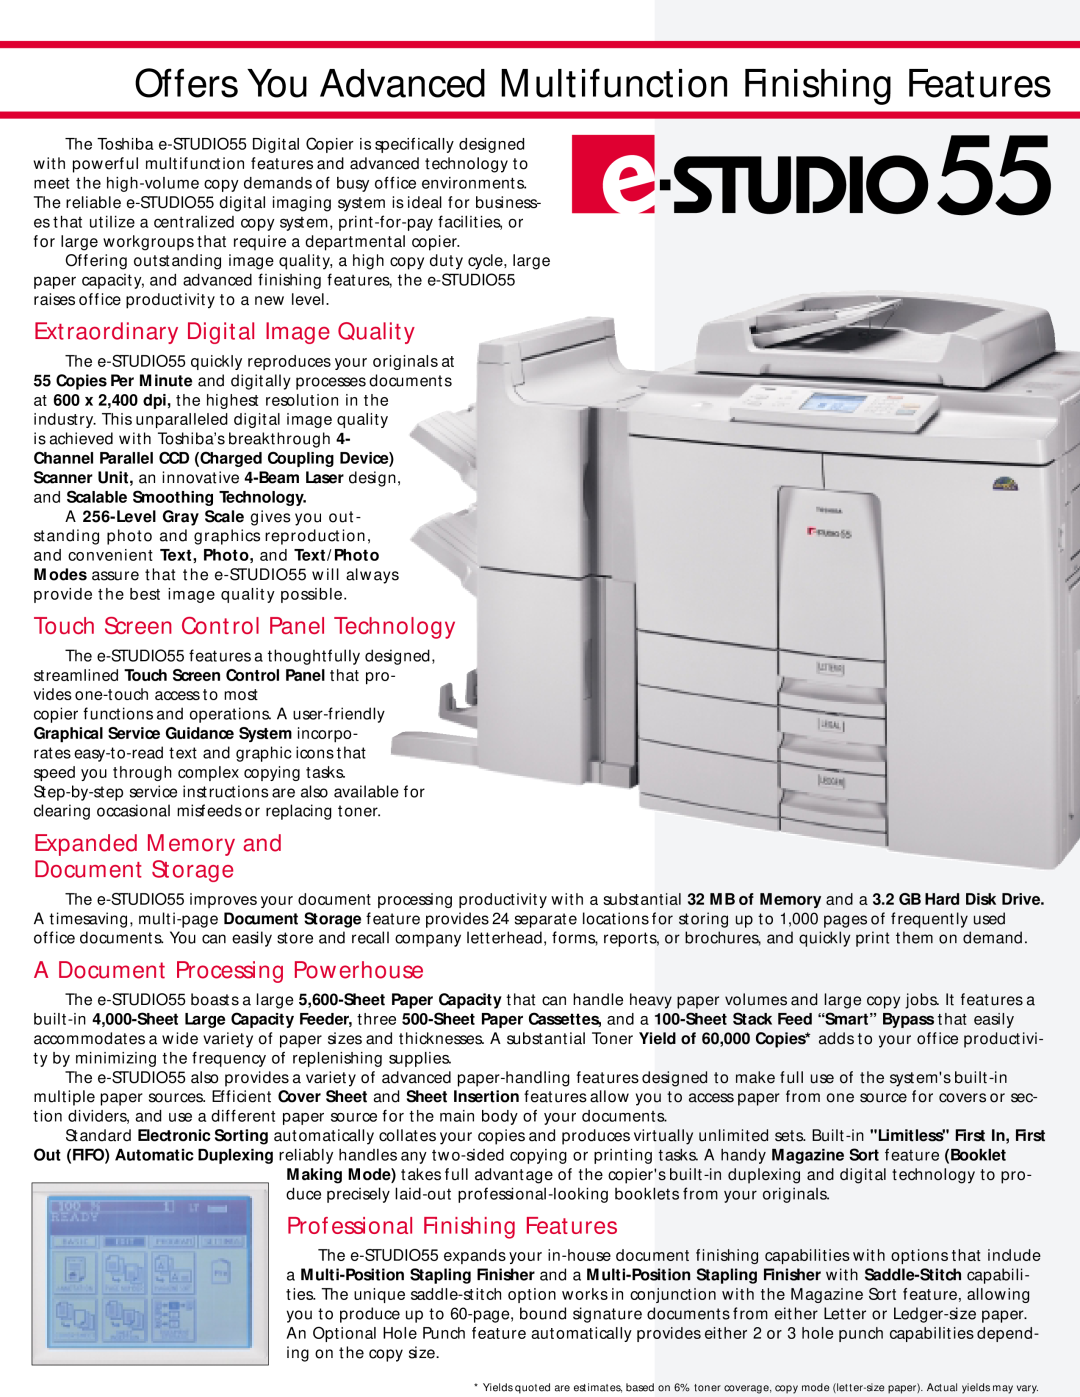 Toshiba e-STUDIO 55 brochure Extraordinary Digital Image Quality, Touch Screen Control Panel Technology 